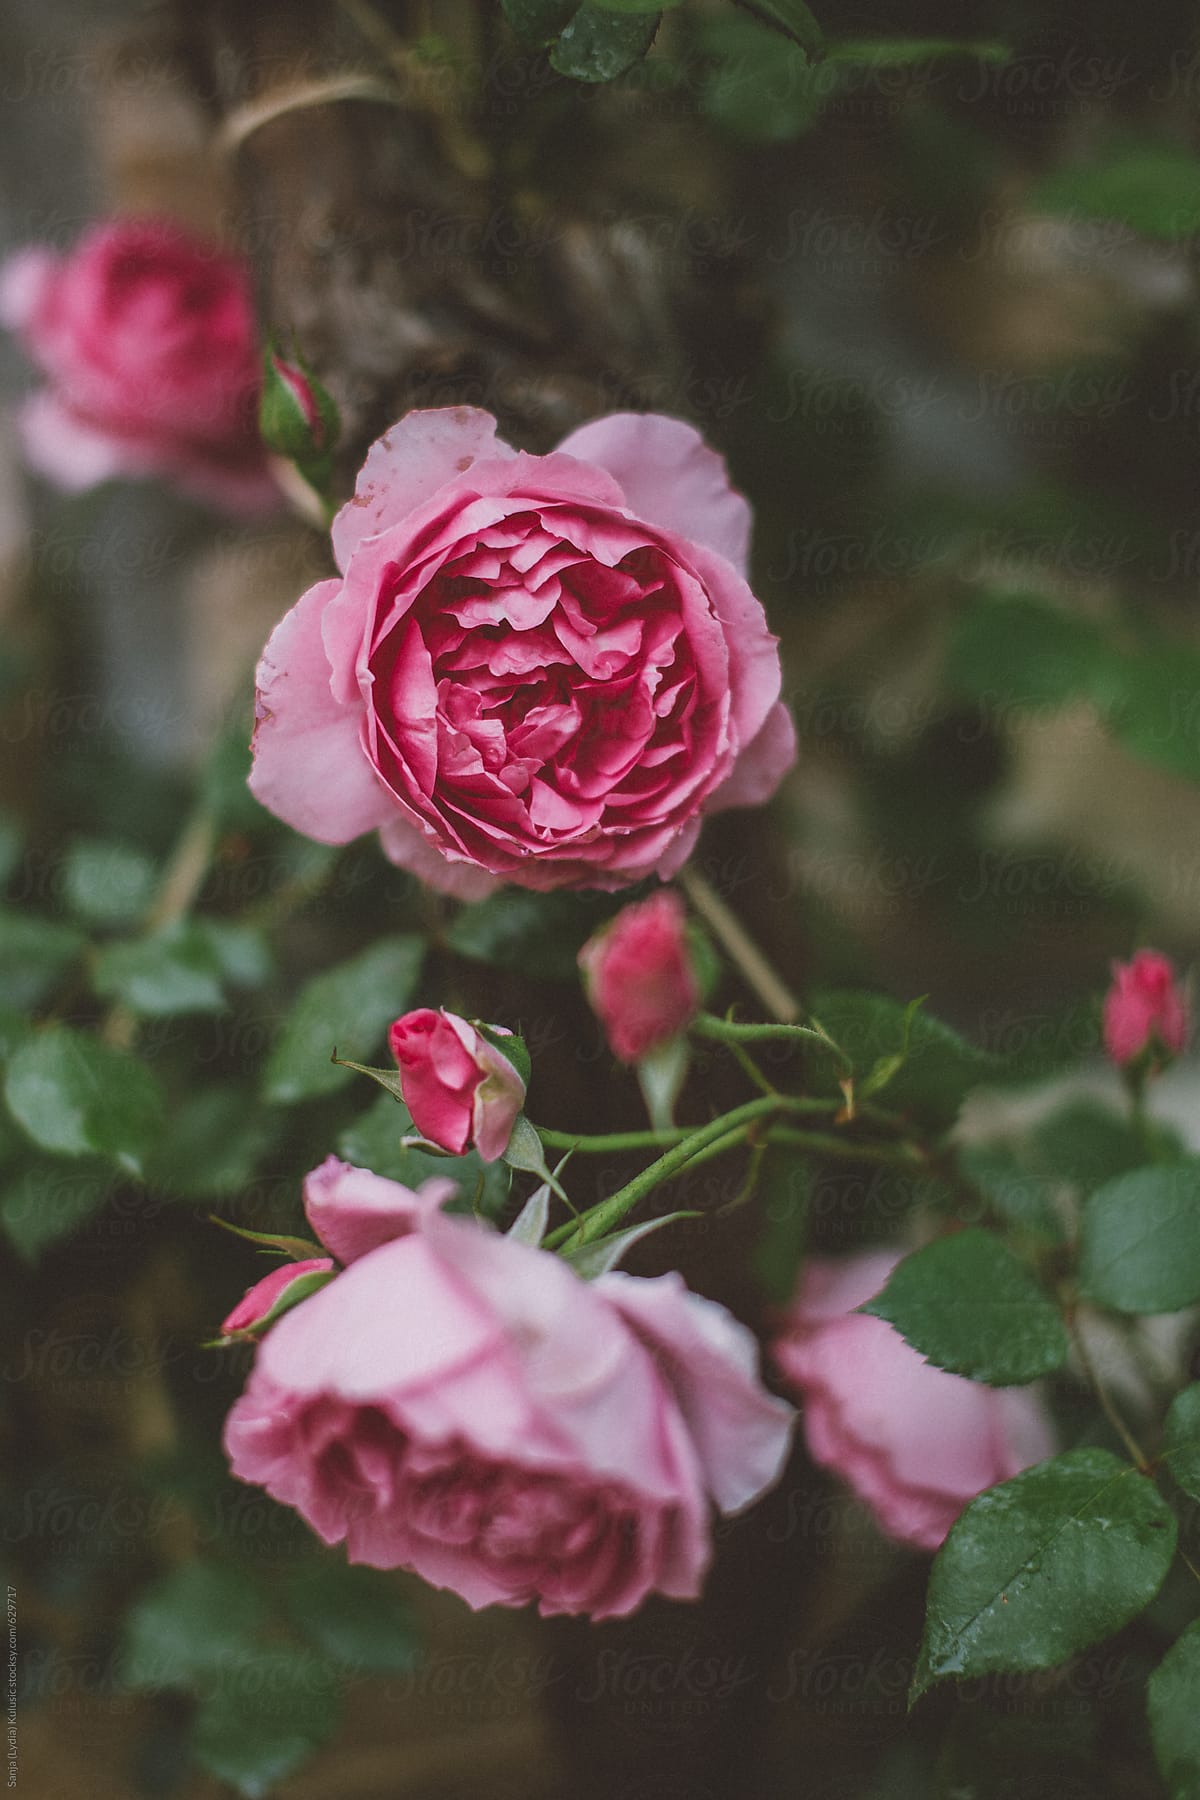 Beautiful organic dark and light pink roses blooming